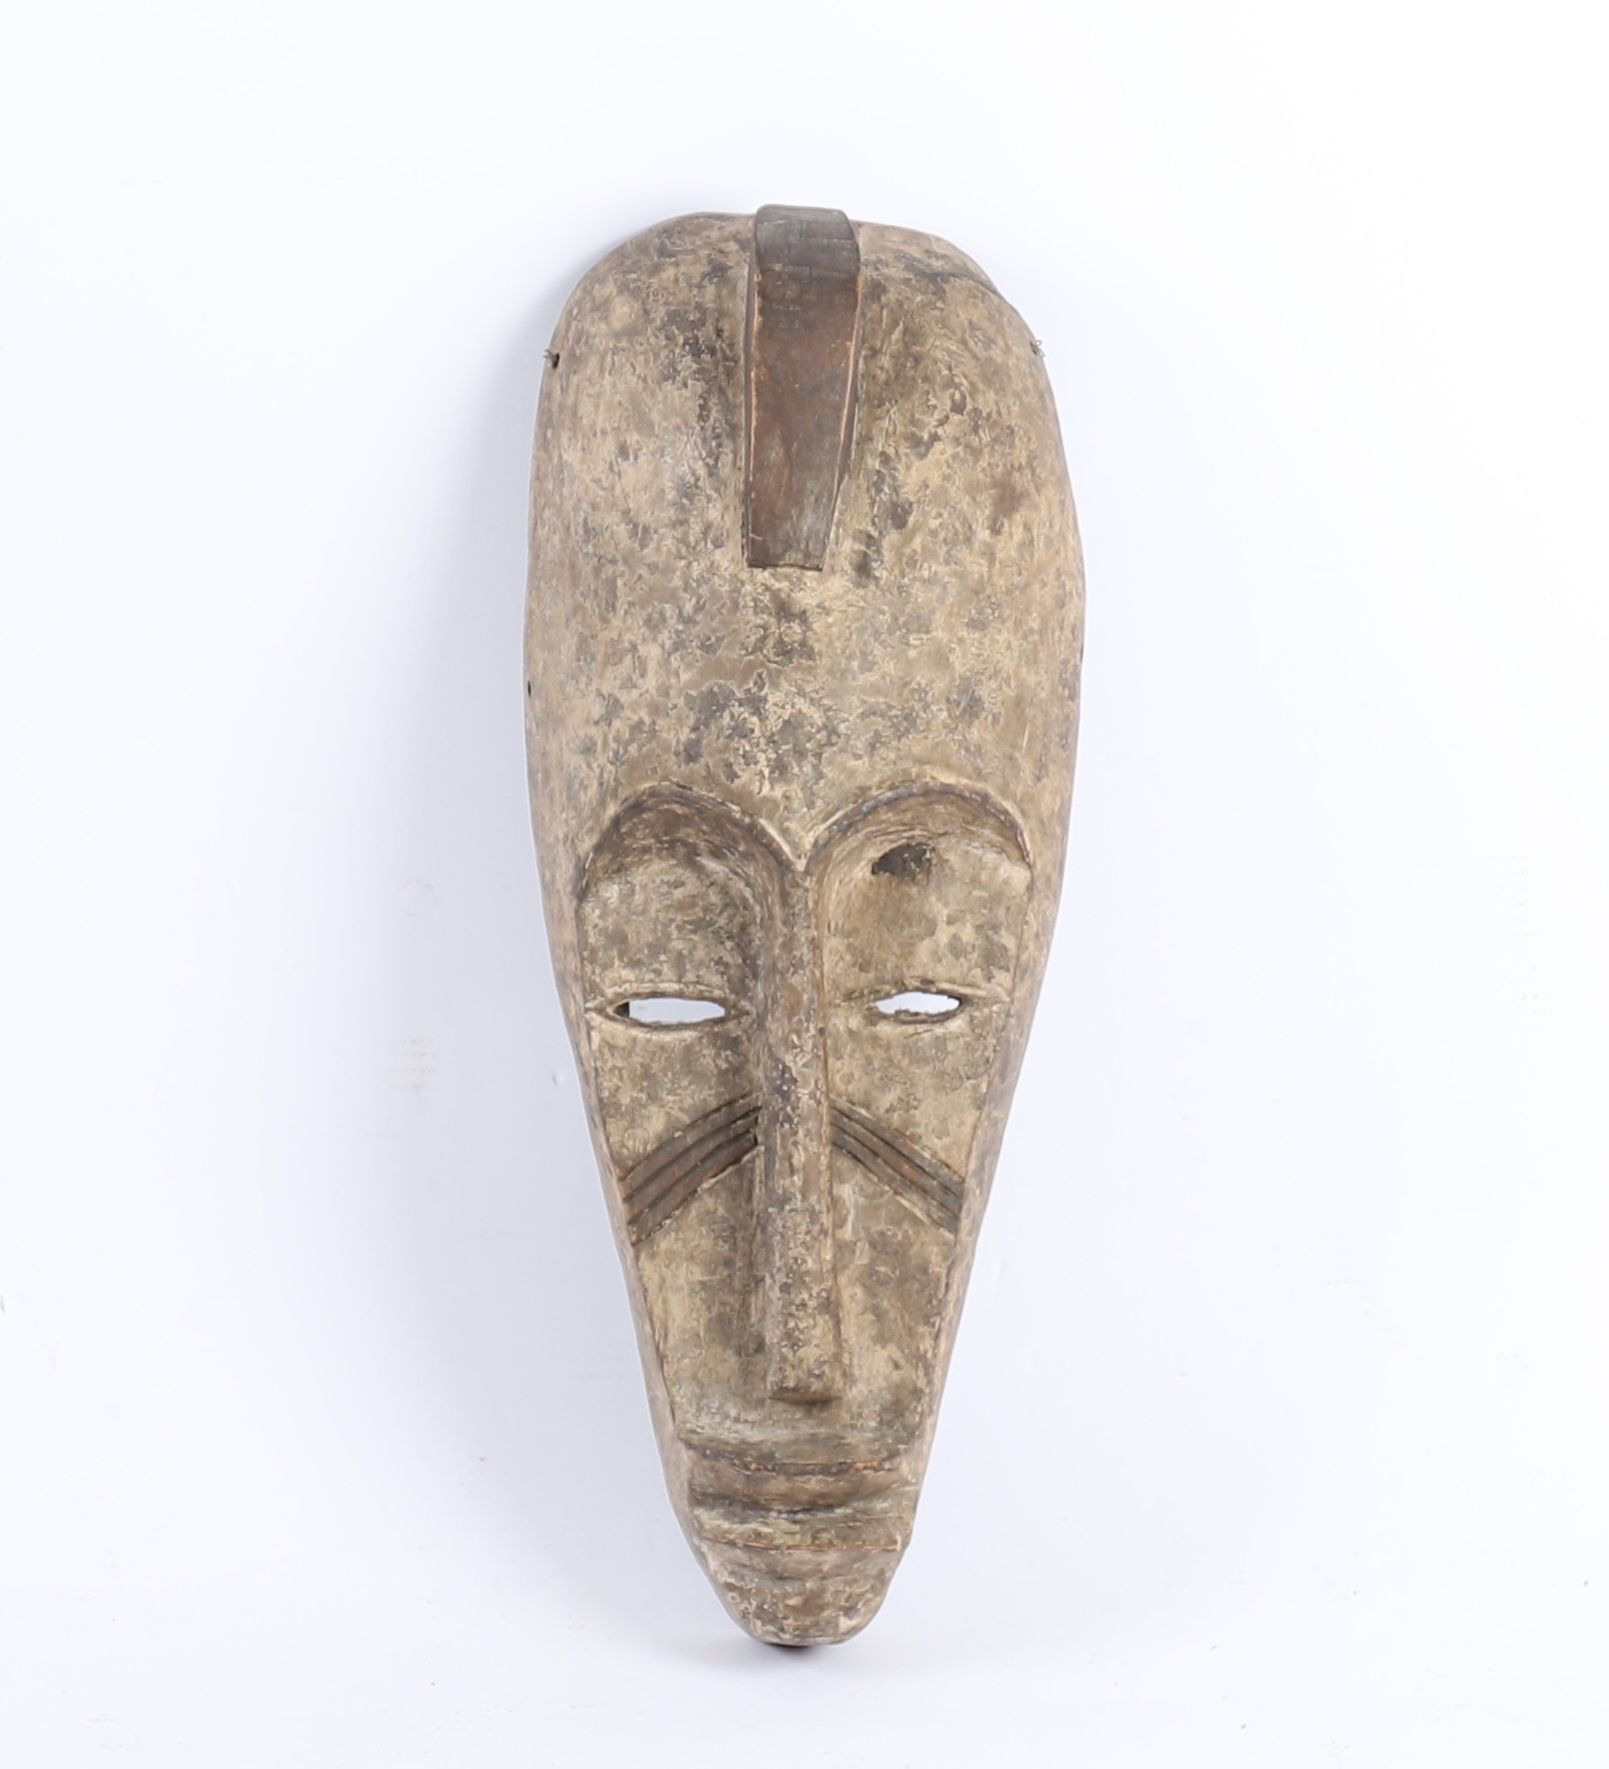 Null 来自加蓬的非洲獠牙式面具
染色和雕刻的木头
20世纪
62,5 x 24,5厘米